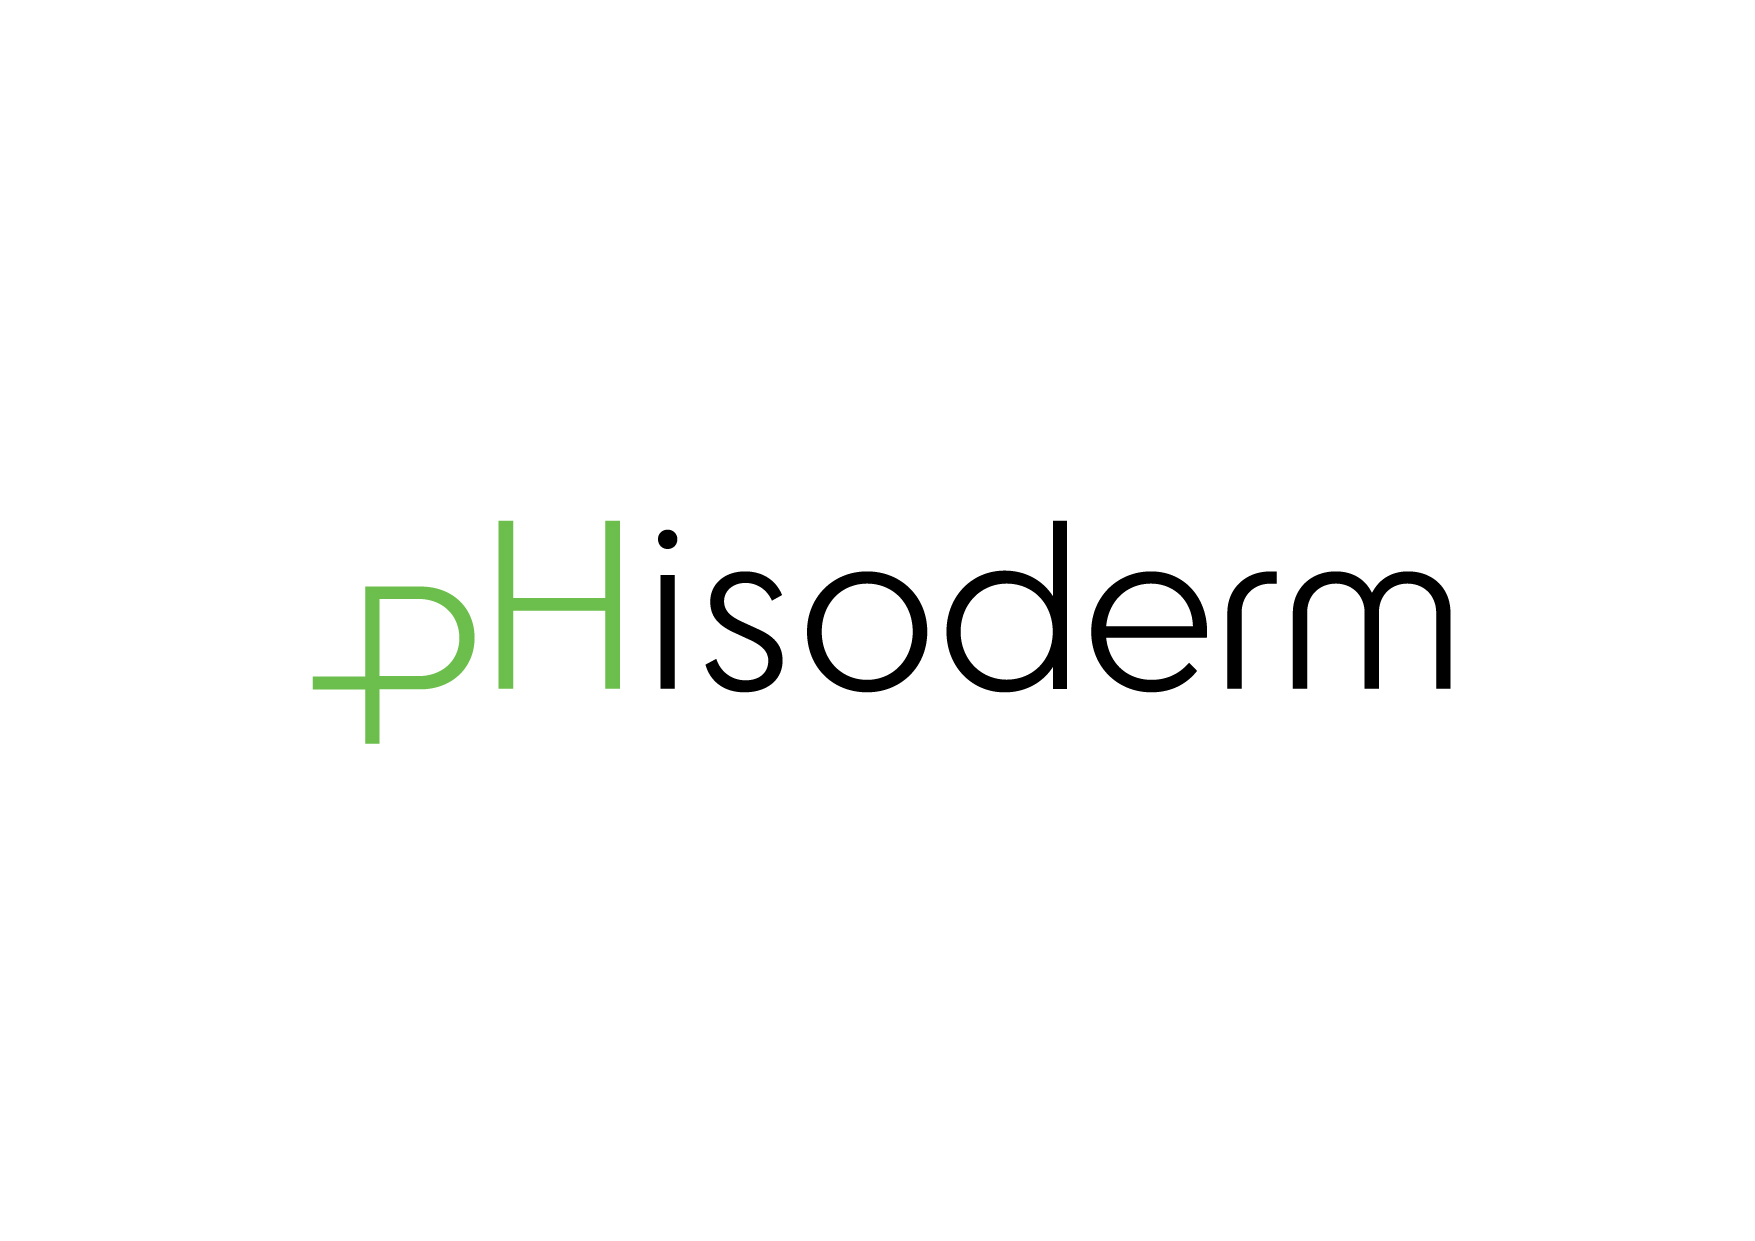 pHisoderm